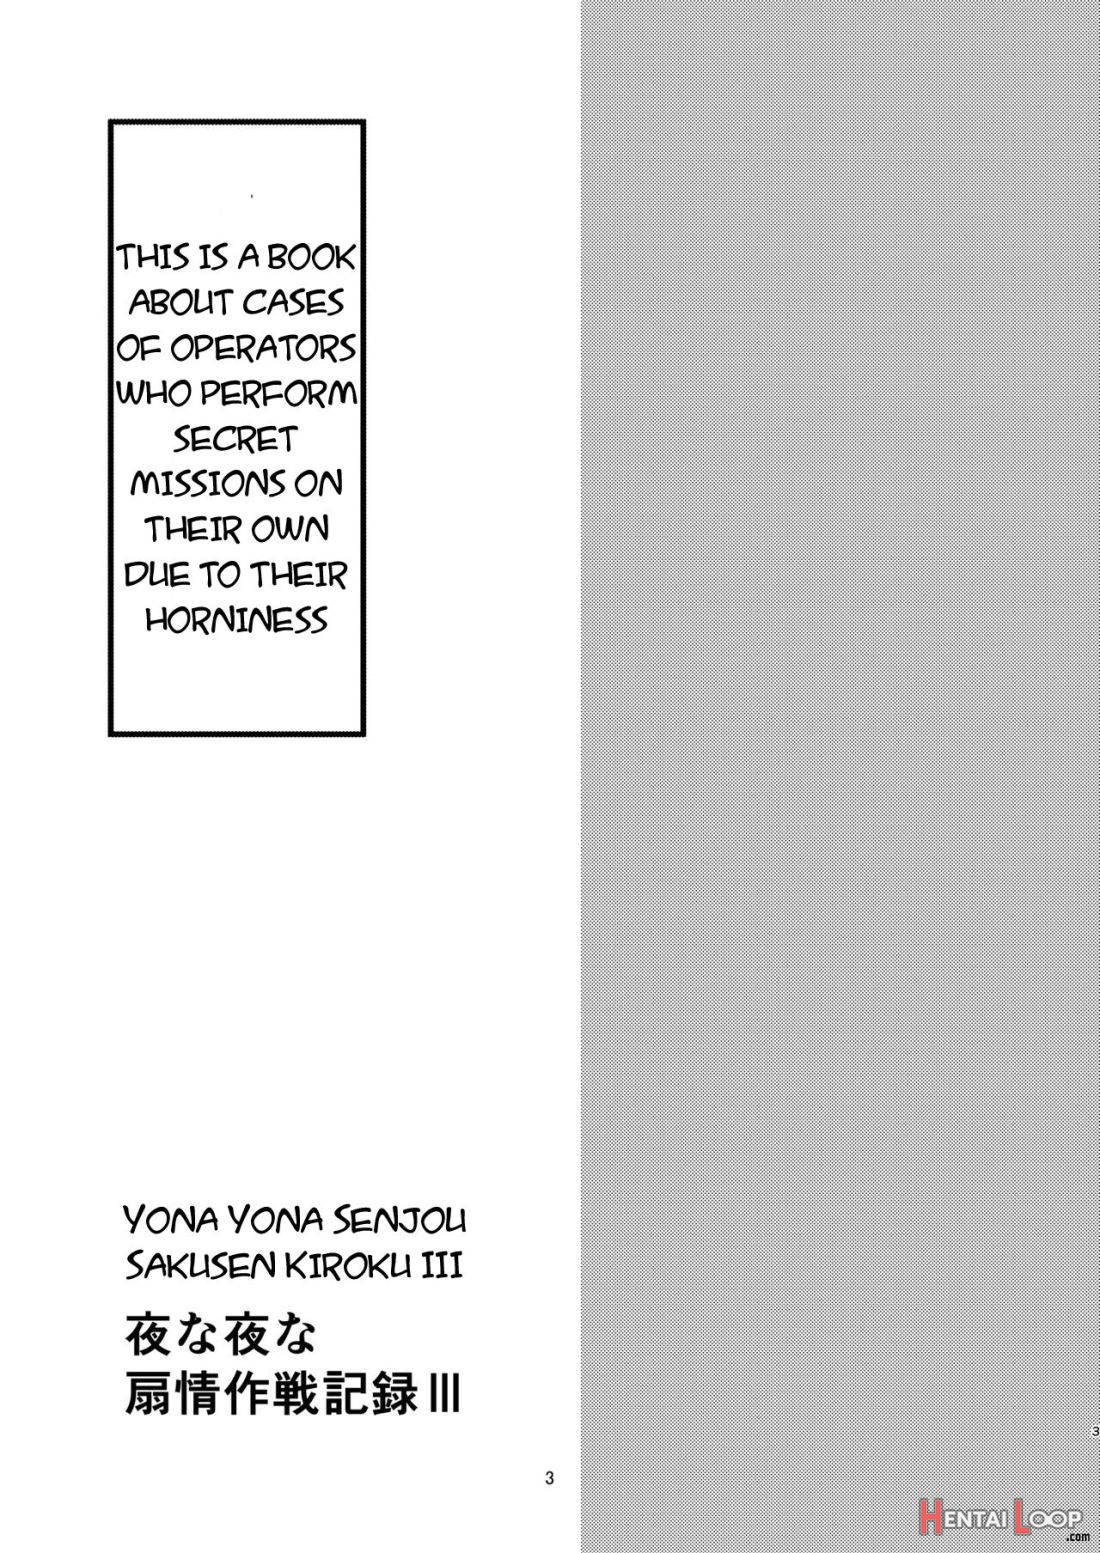 Yona Yona Senjou Sakusen Kiroku III page 2